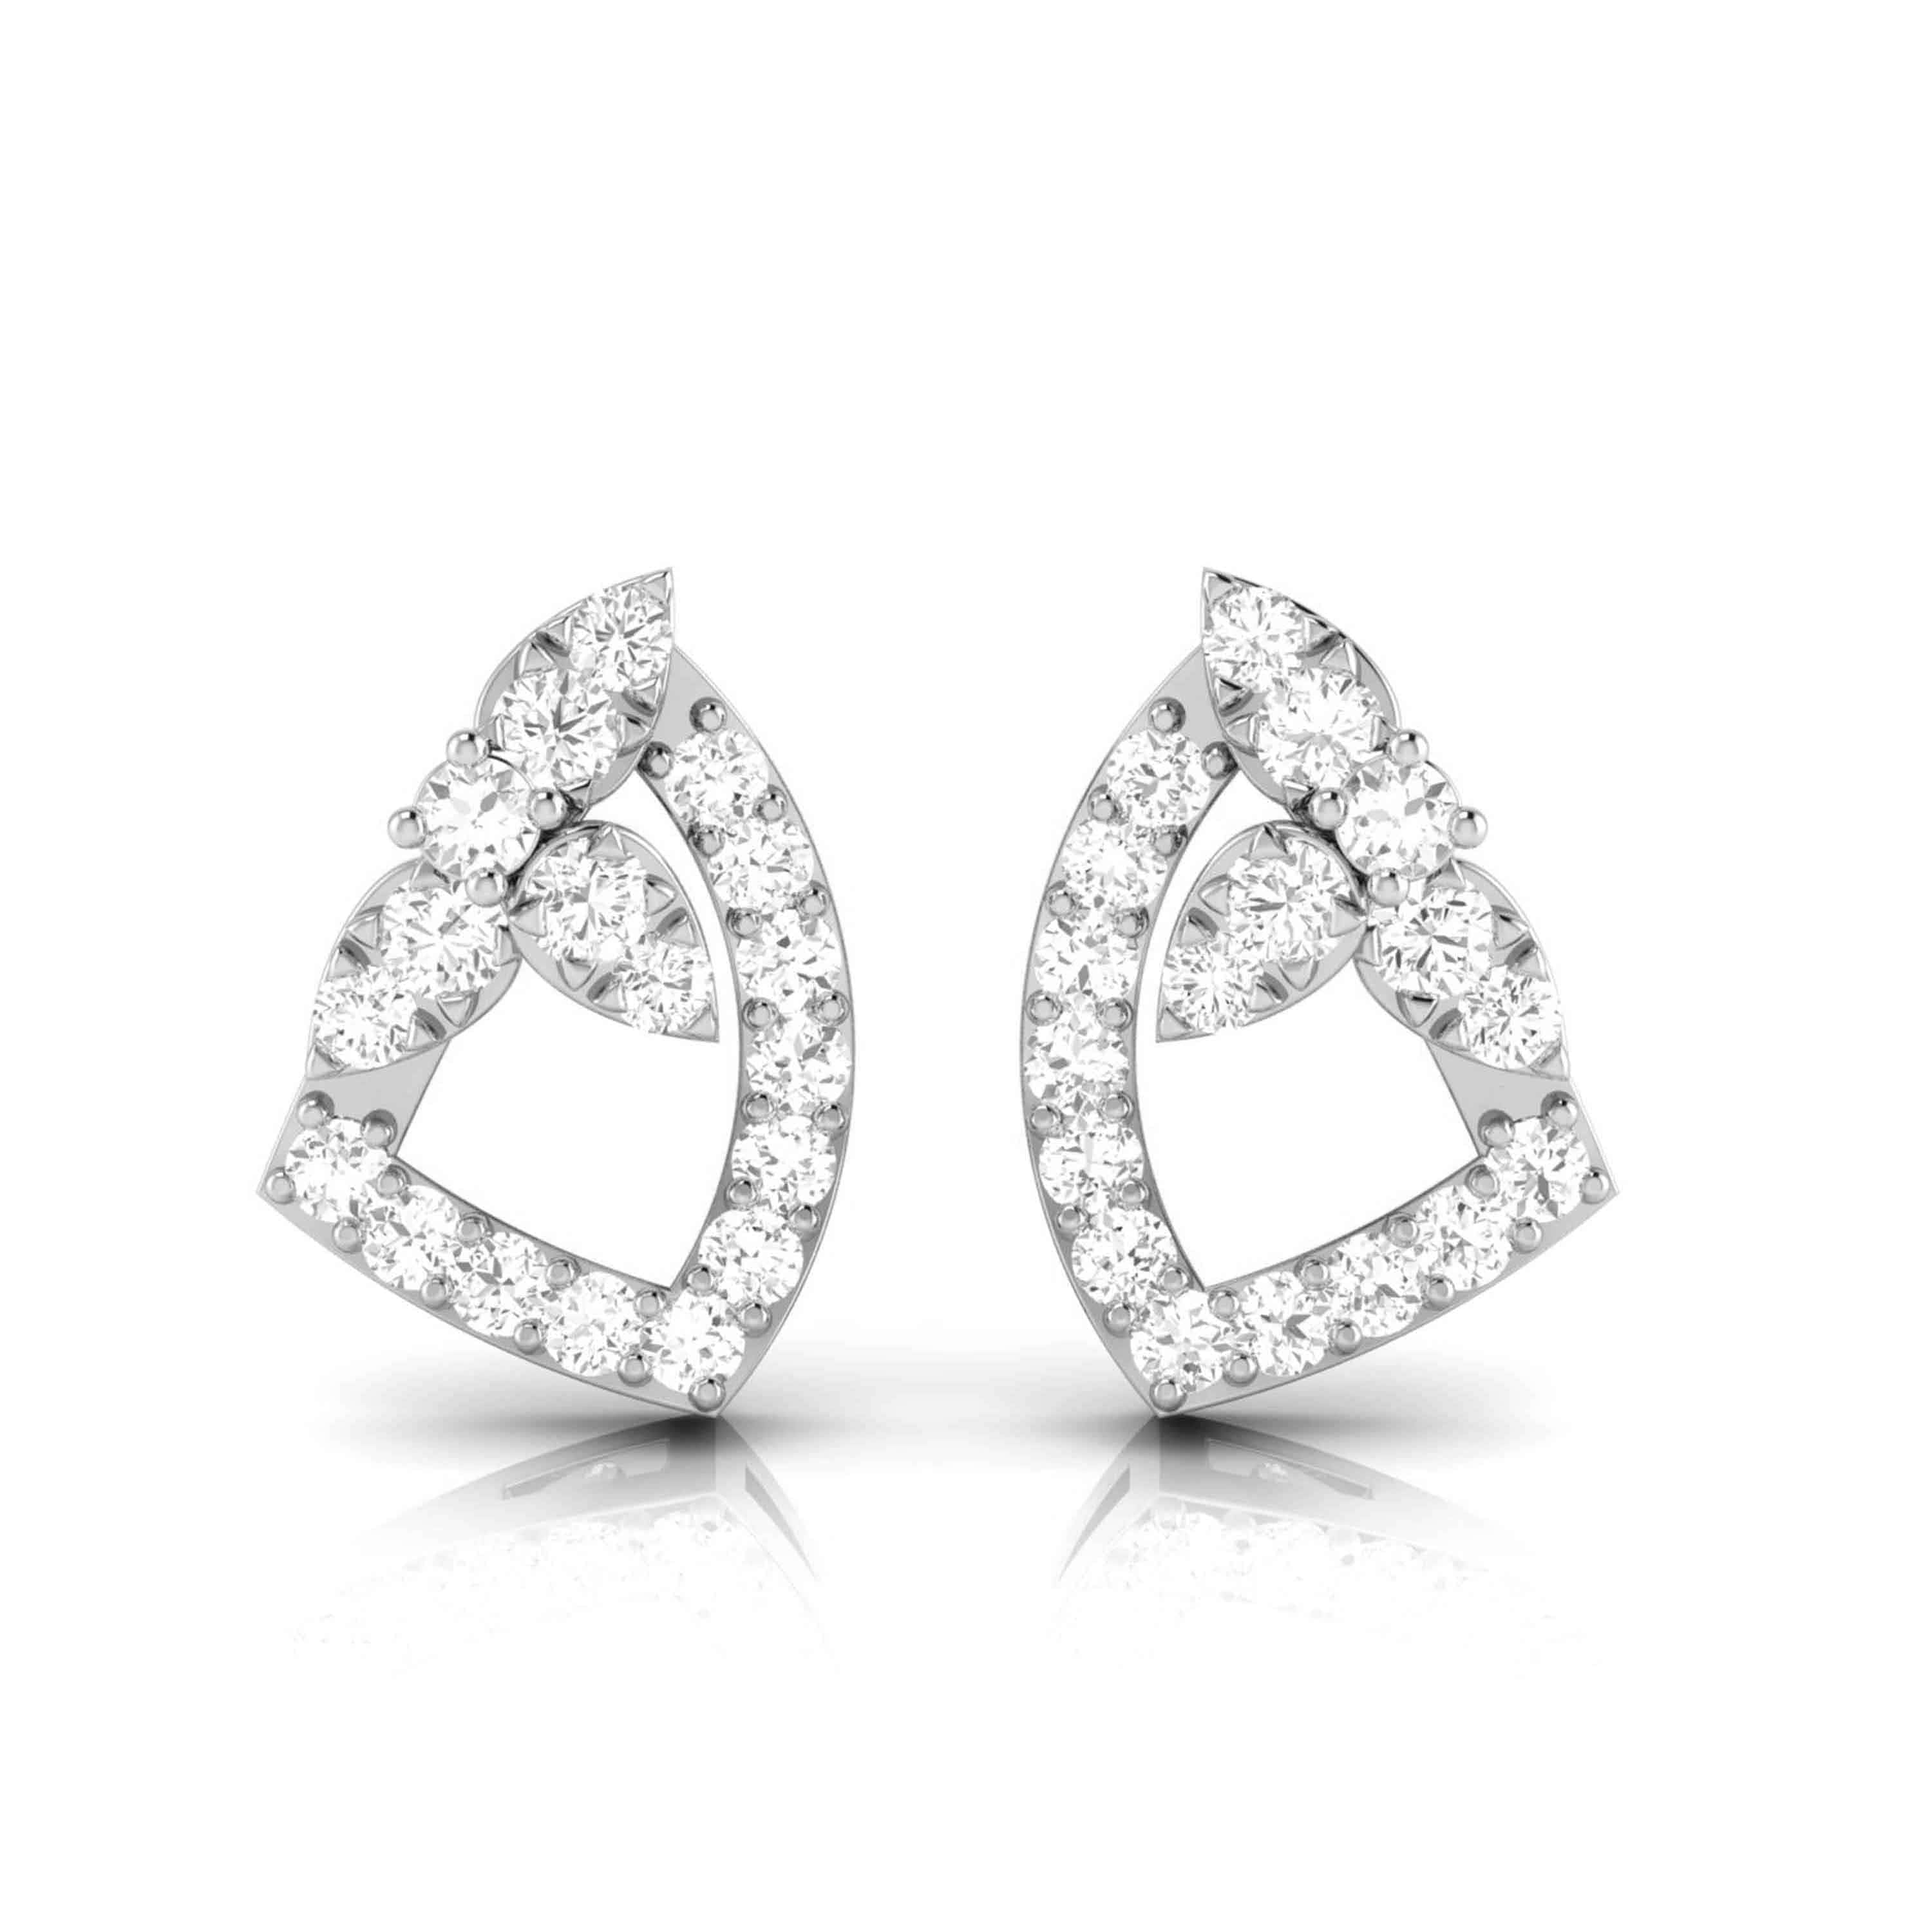 9ct White Gold 020ct Tensionset Diamond Stud Earrings E2038W2018   thbakercouk